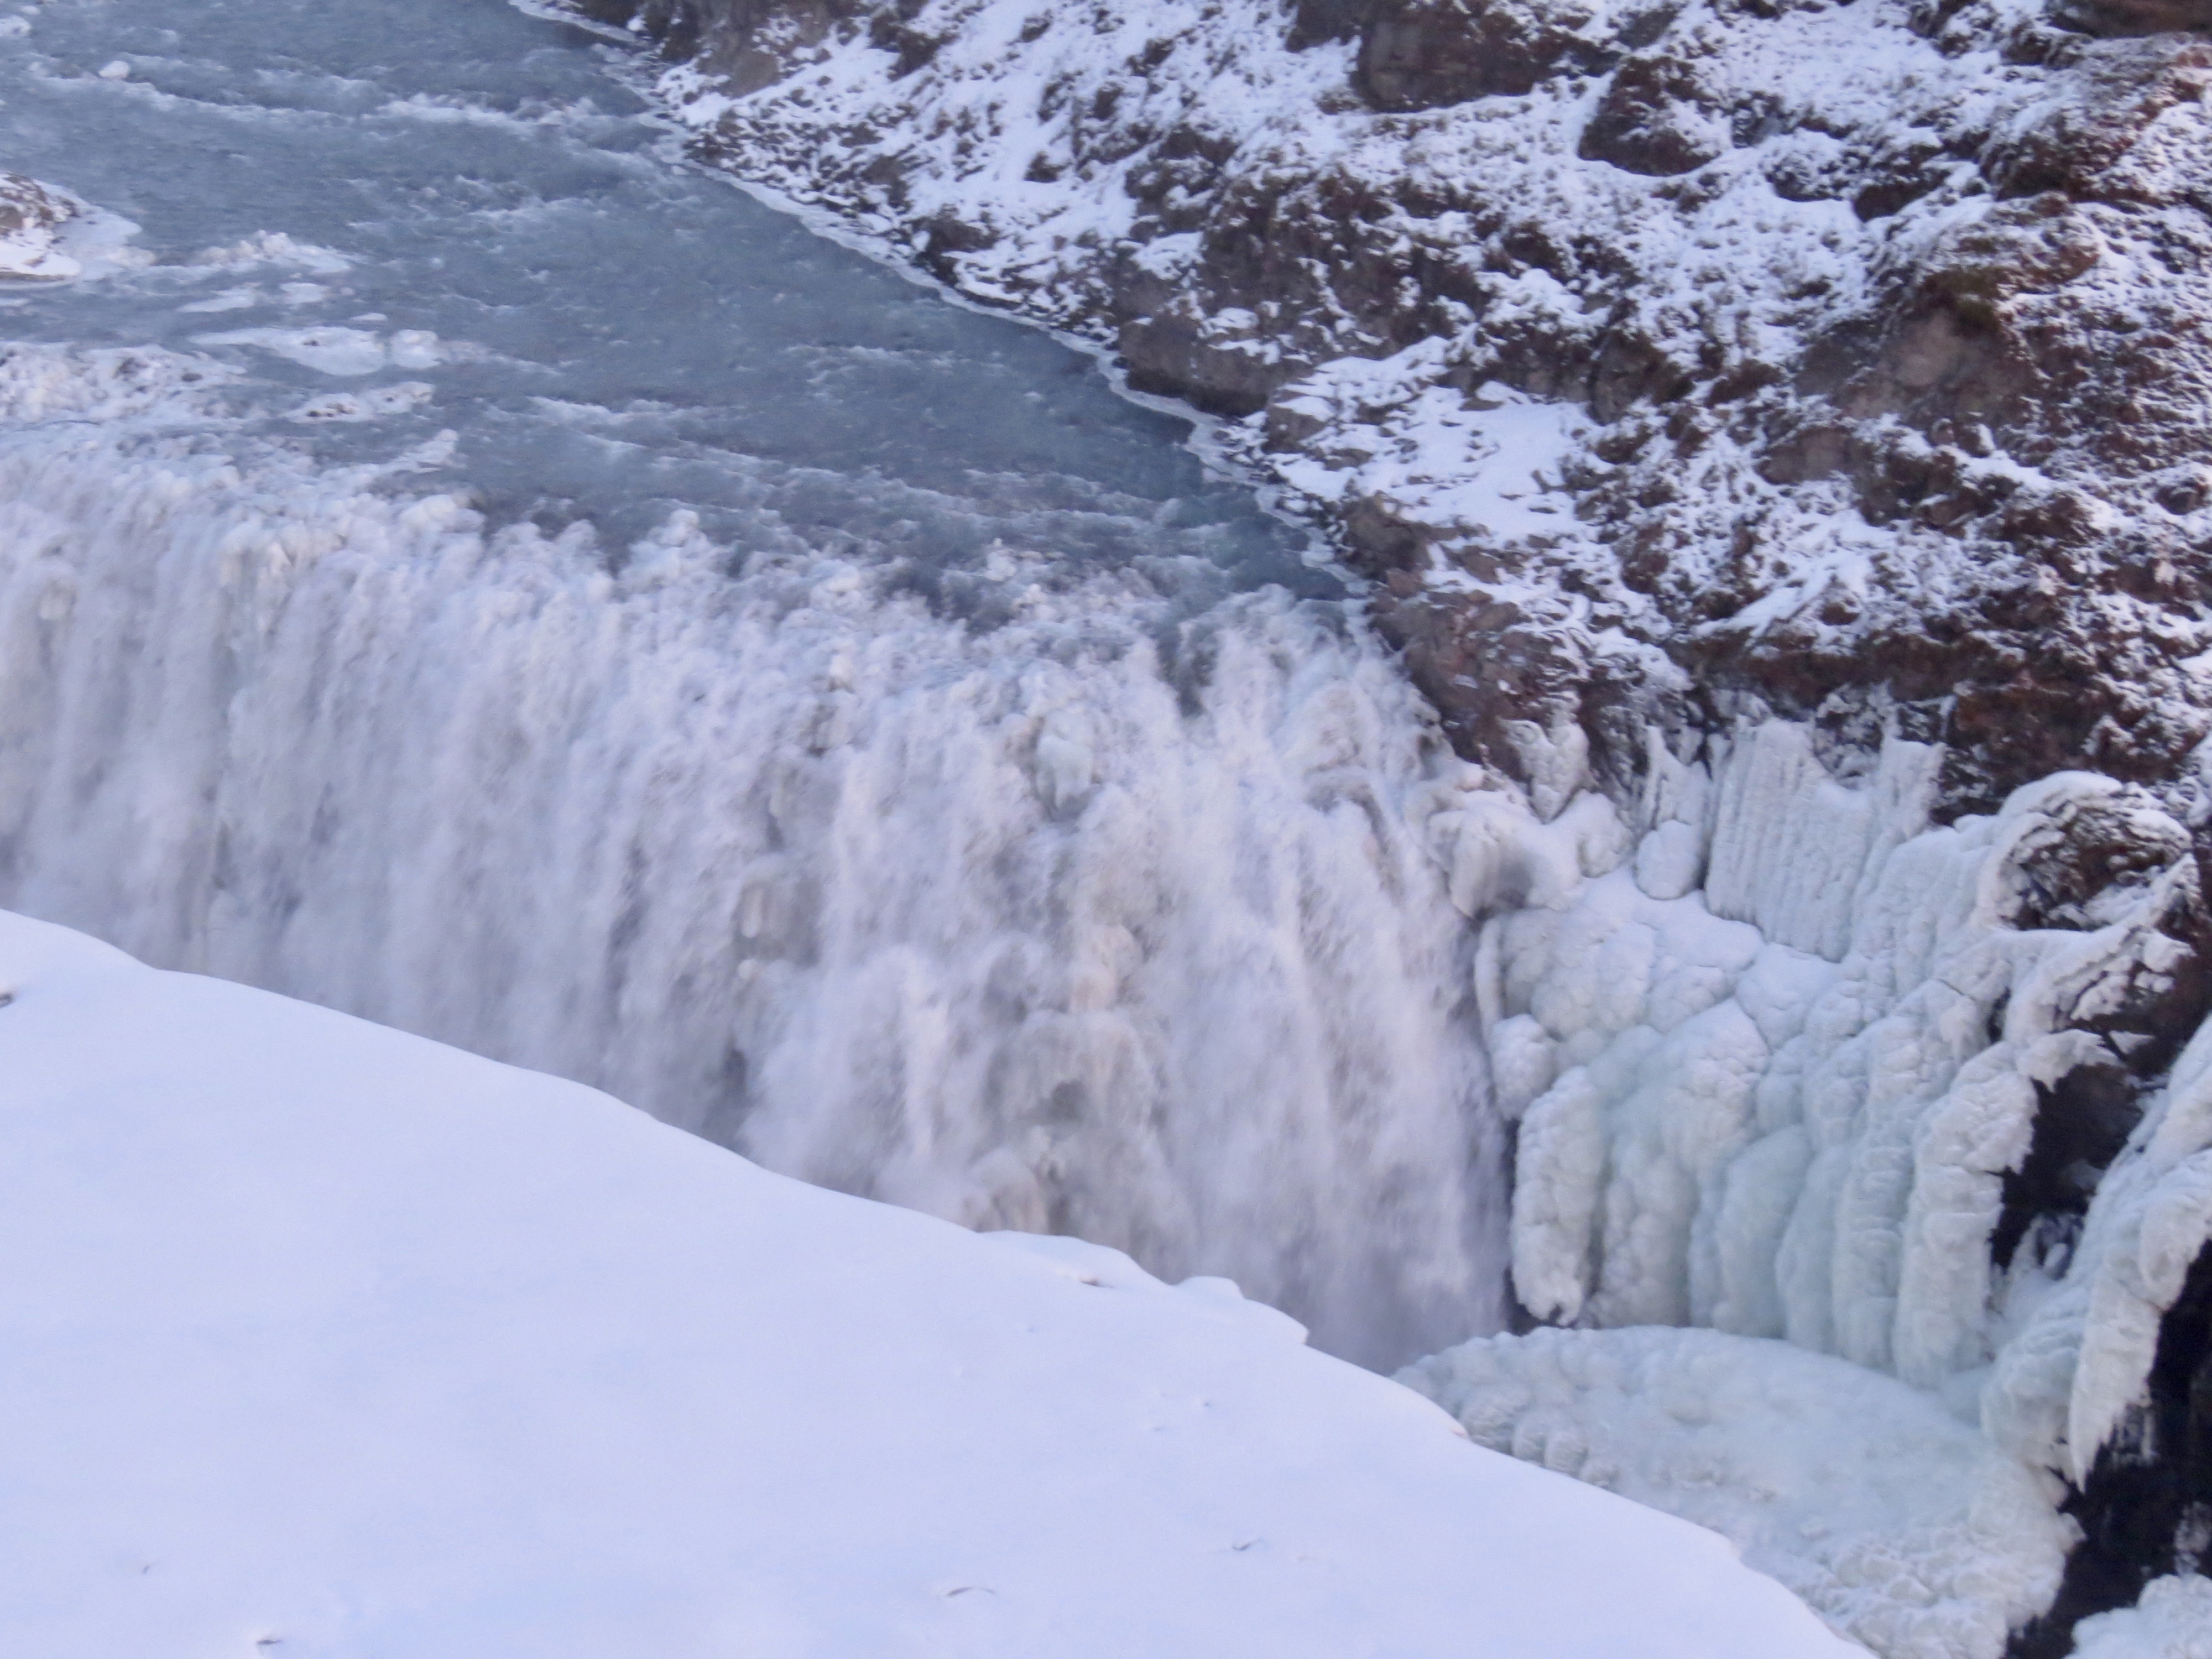 Iceland has amazing waterfalls